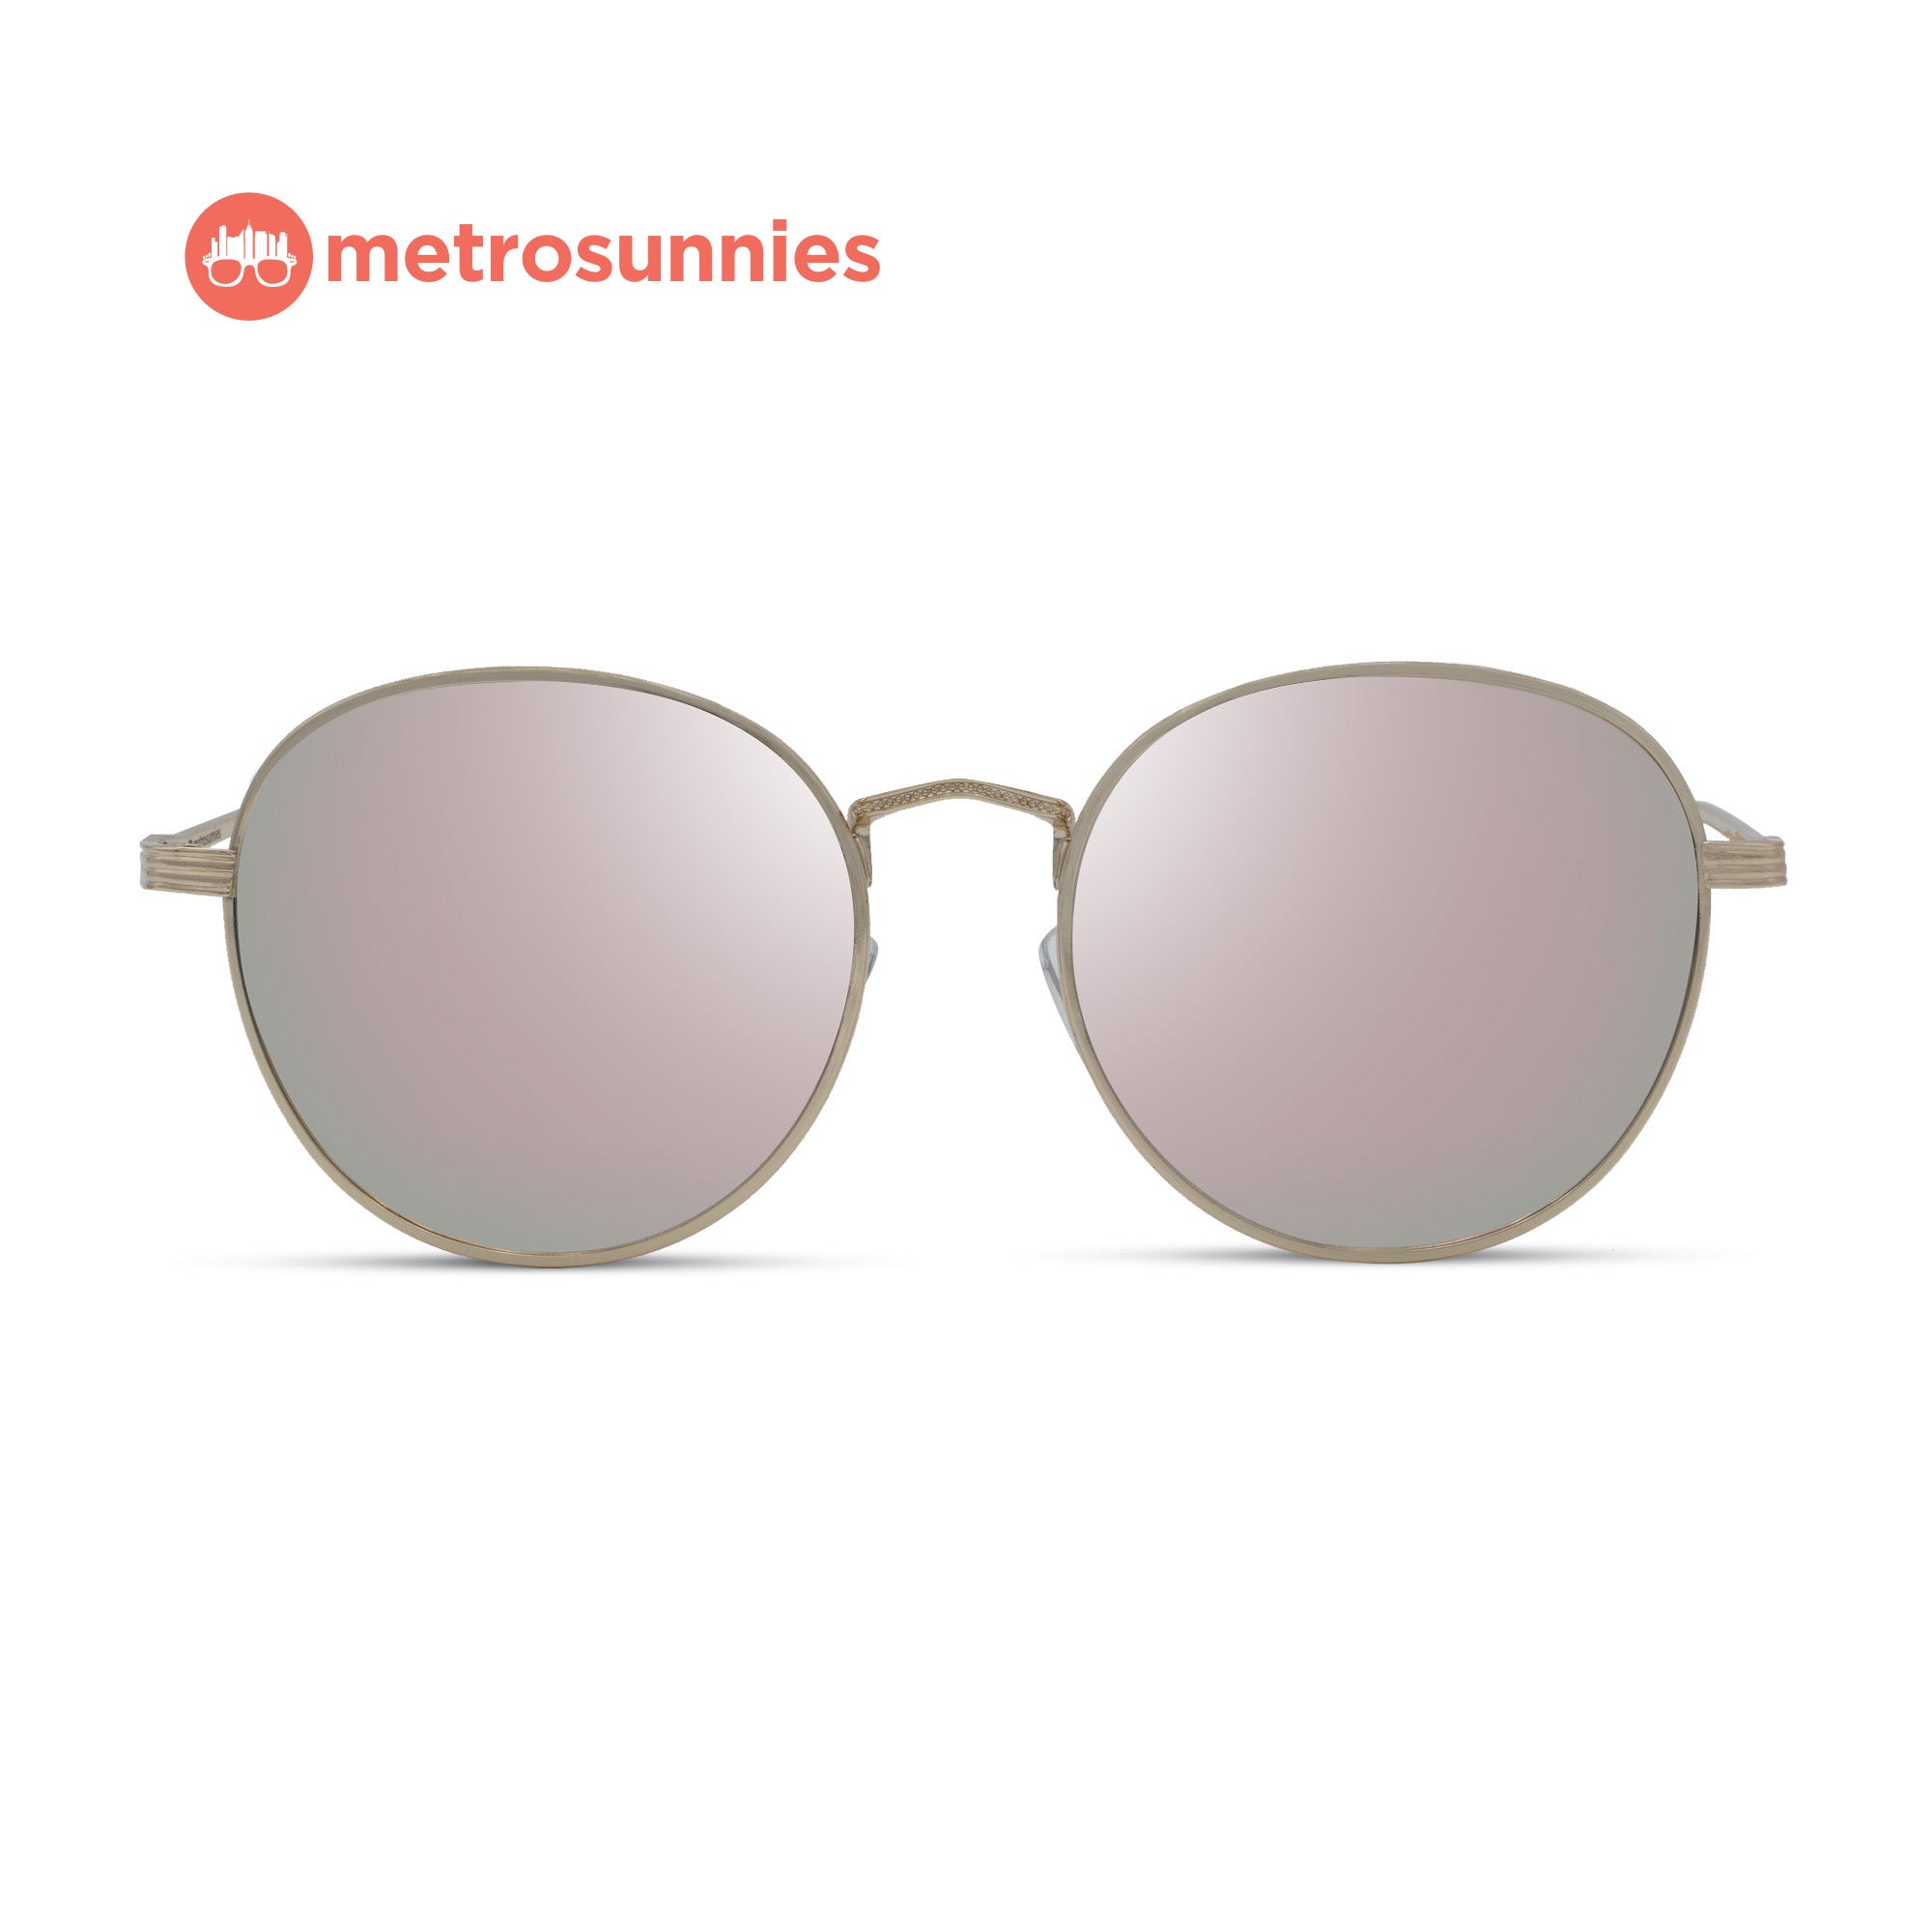 MetroSunnies Richard Sunnies (Rose Gold) / Sunglasses with UV400 Protection / Fashion Eyewear Unisex